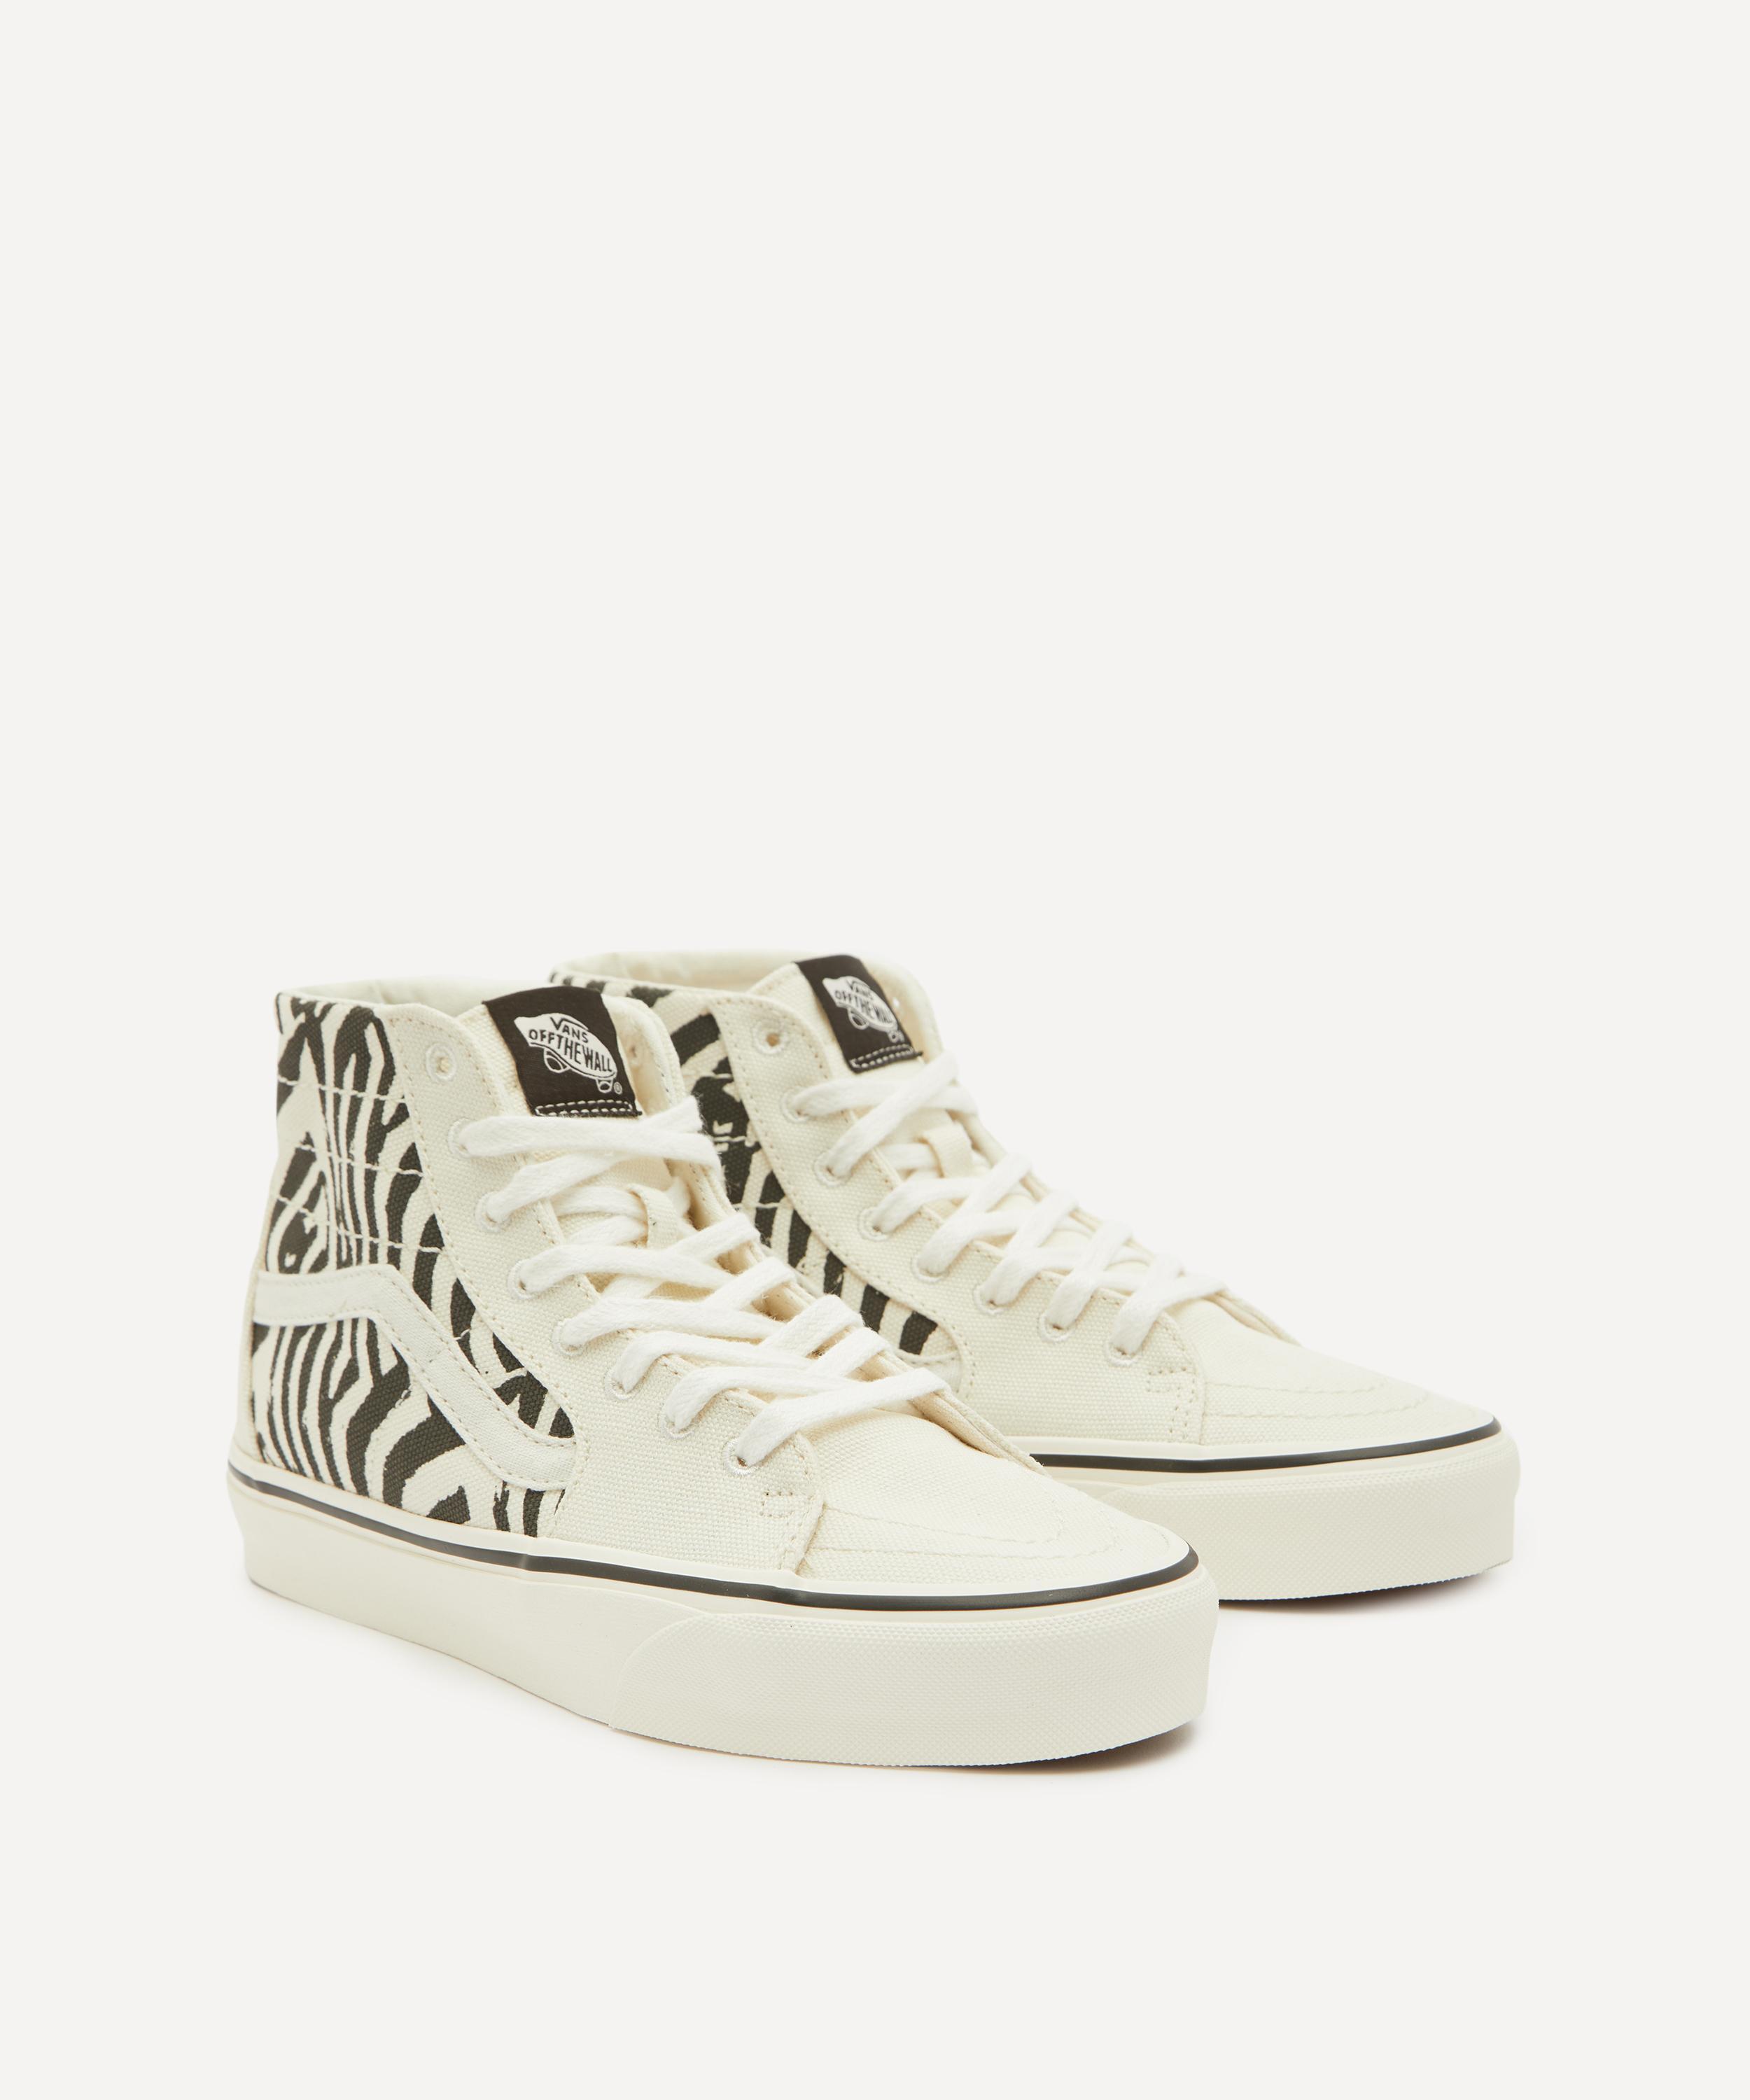 Vans Sk8-hi Dx Zebra Shoes in White | Lyst